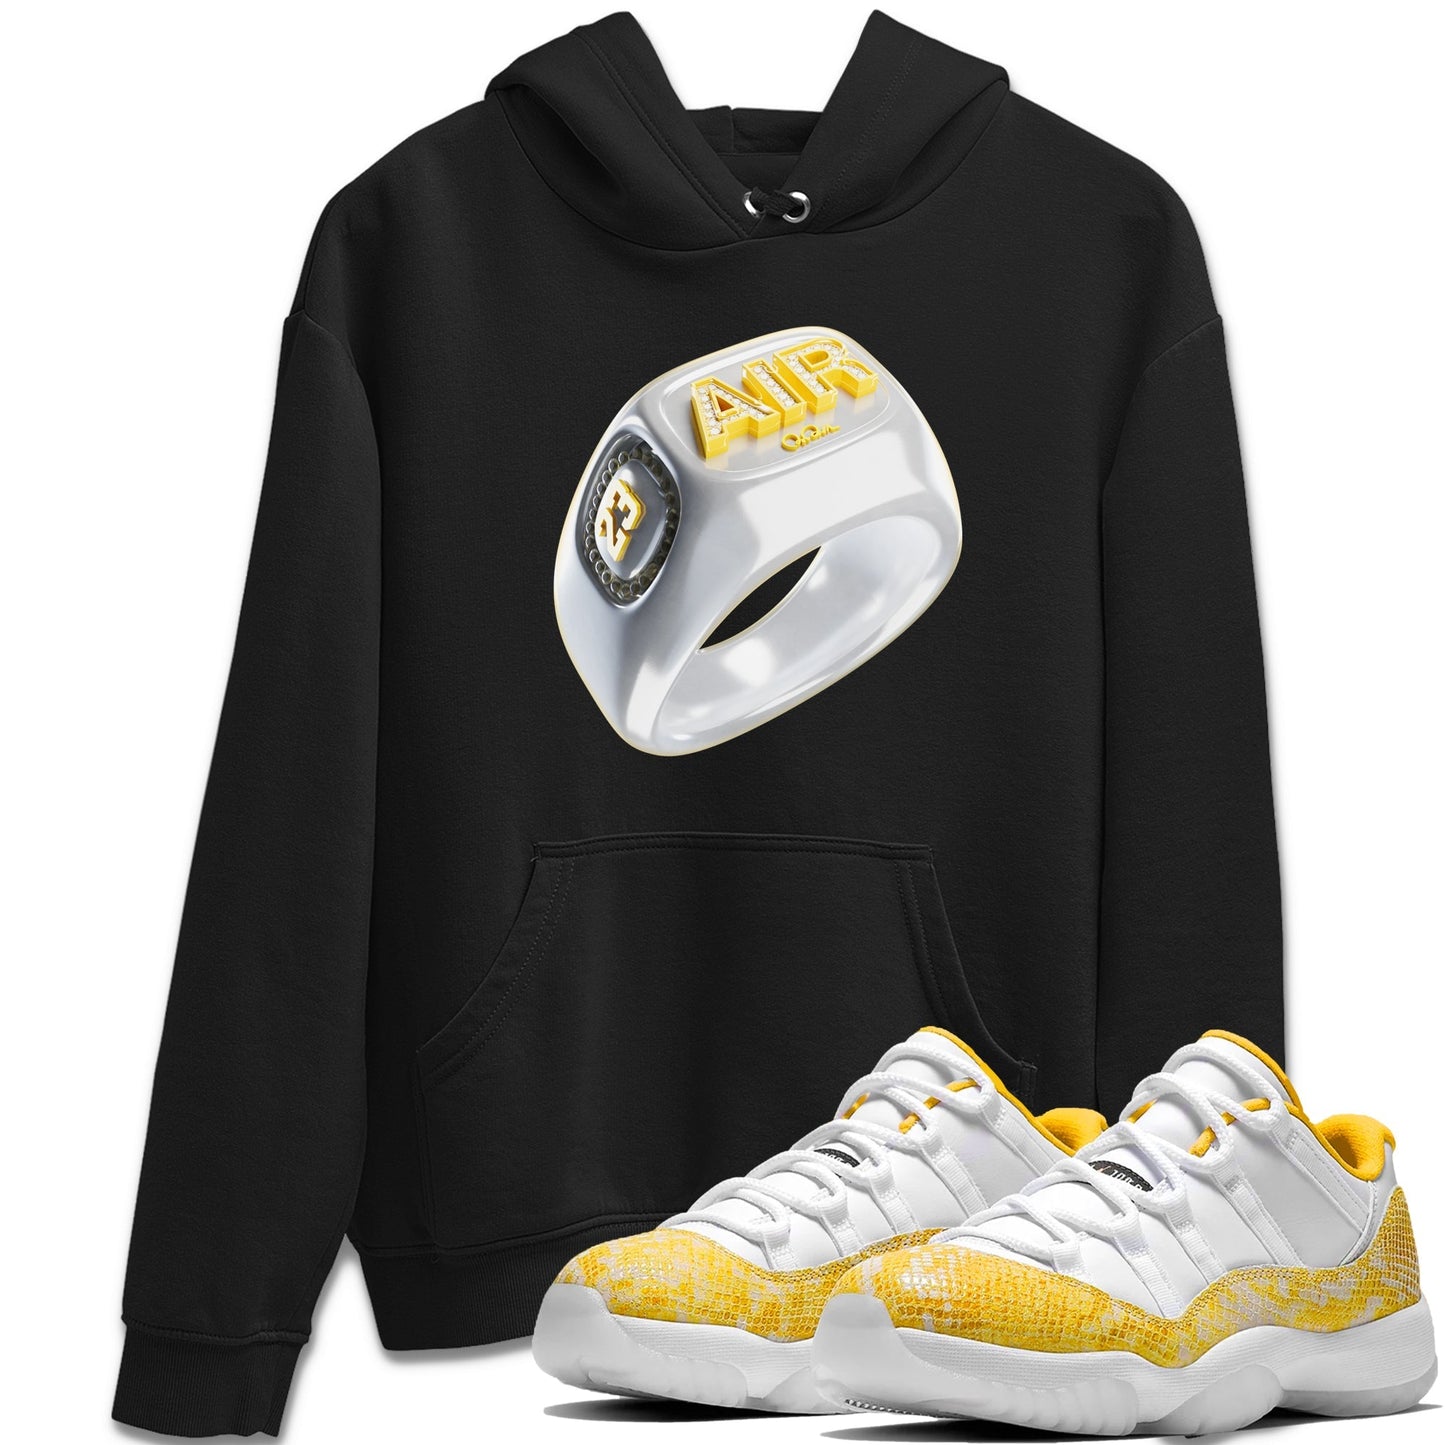 Air Jordan 11 Yellow Python Sneaker Match Tees Diamond Ring Shirts AJ11 Yellow Python Drip Gear Zone Unisex Shirts Black 1